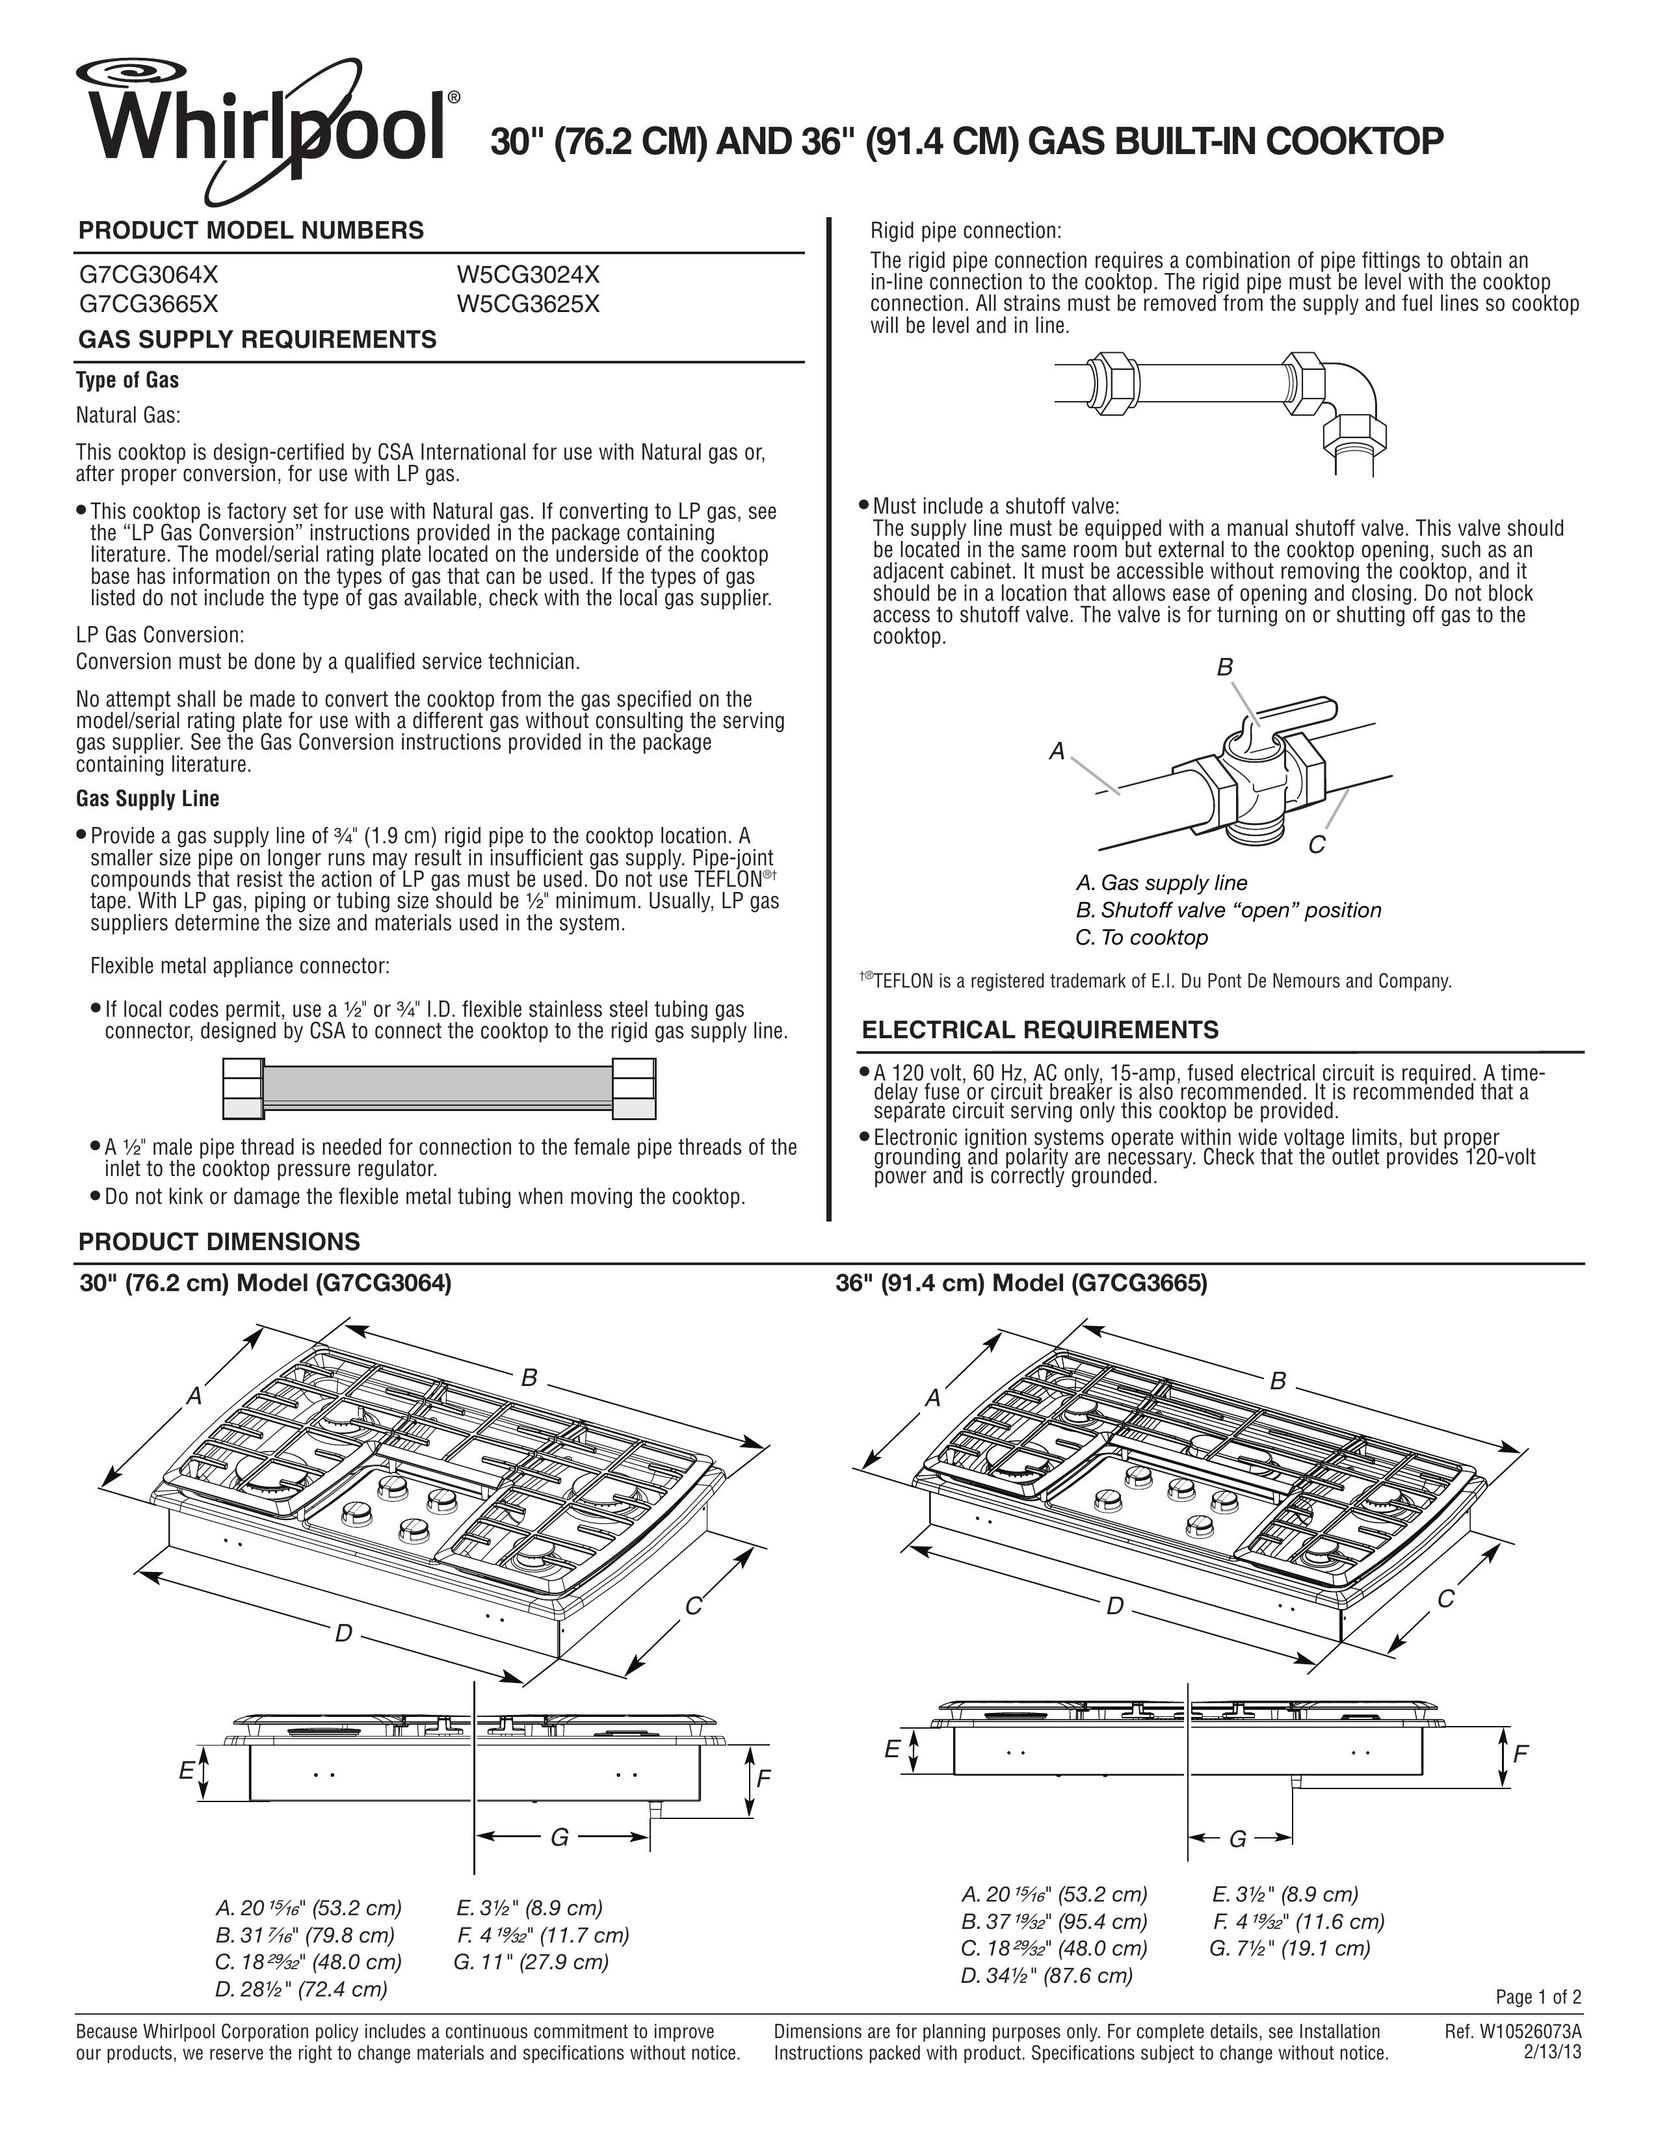 Whirlpool G7CG3064X Cooktop User Manual